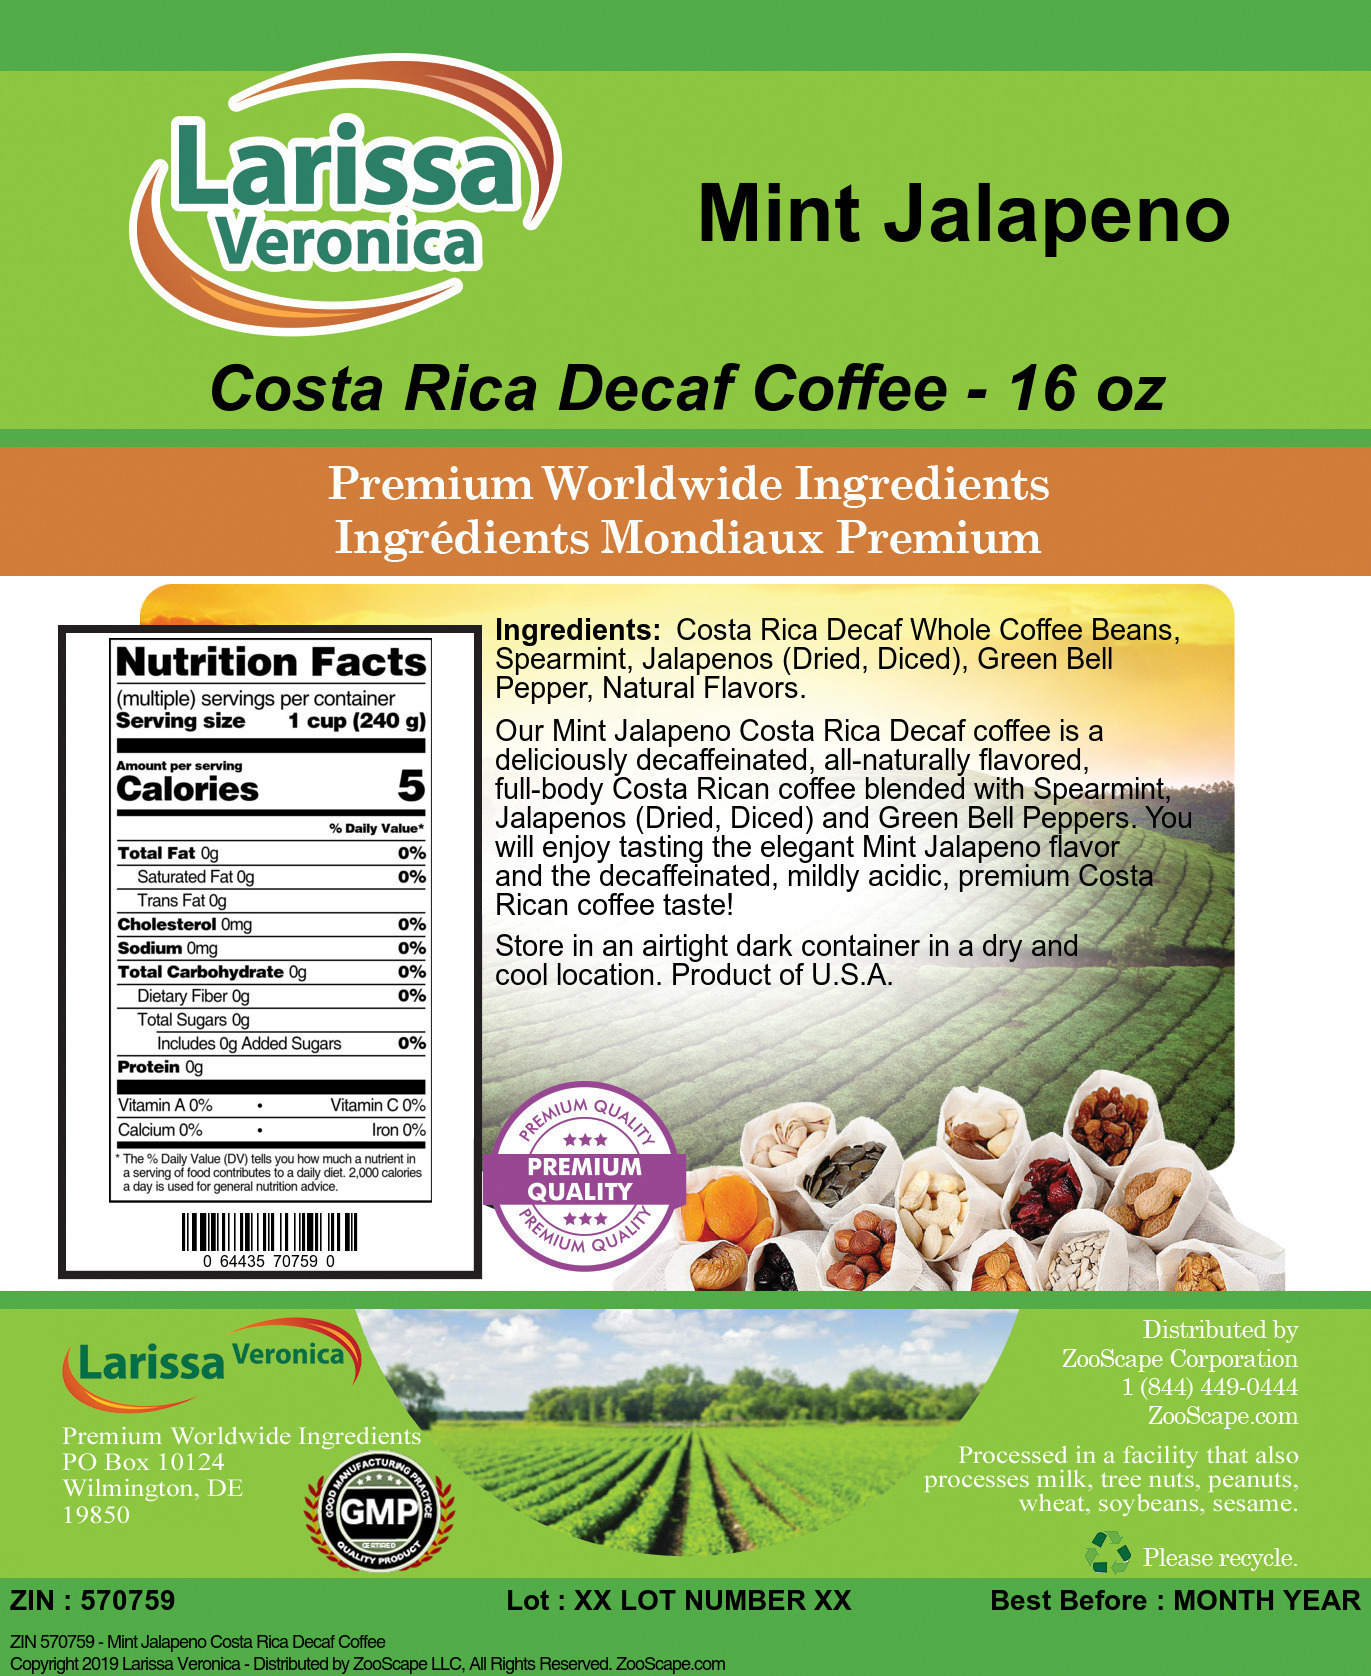 Mint Jalapeno Costa Rica Decaf Coffee - Label